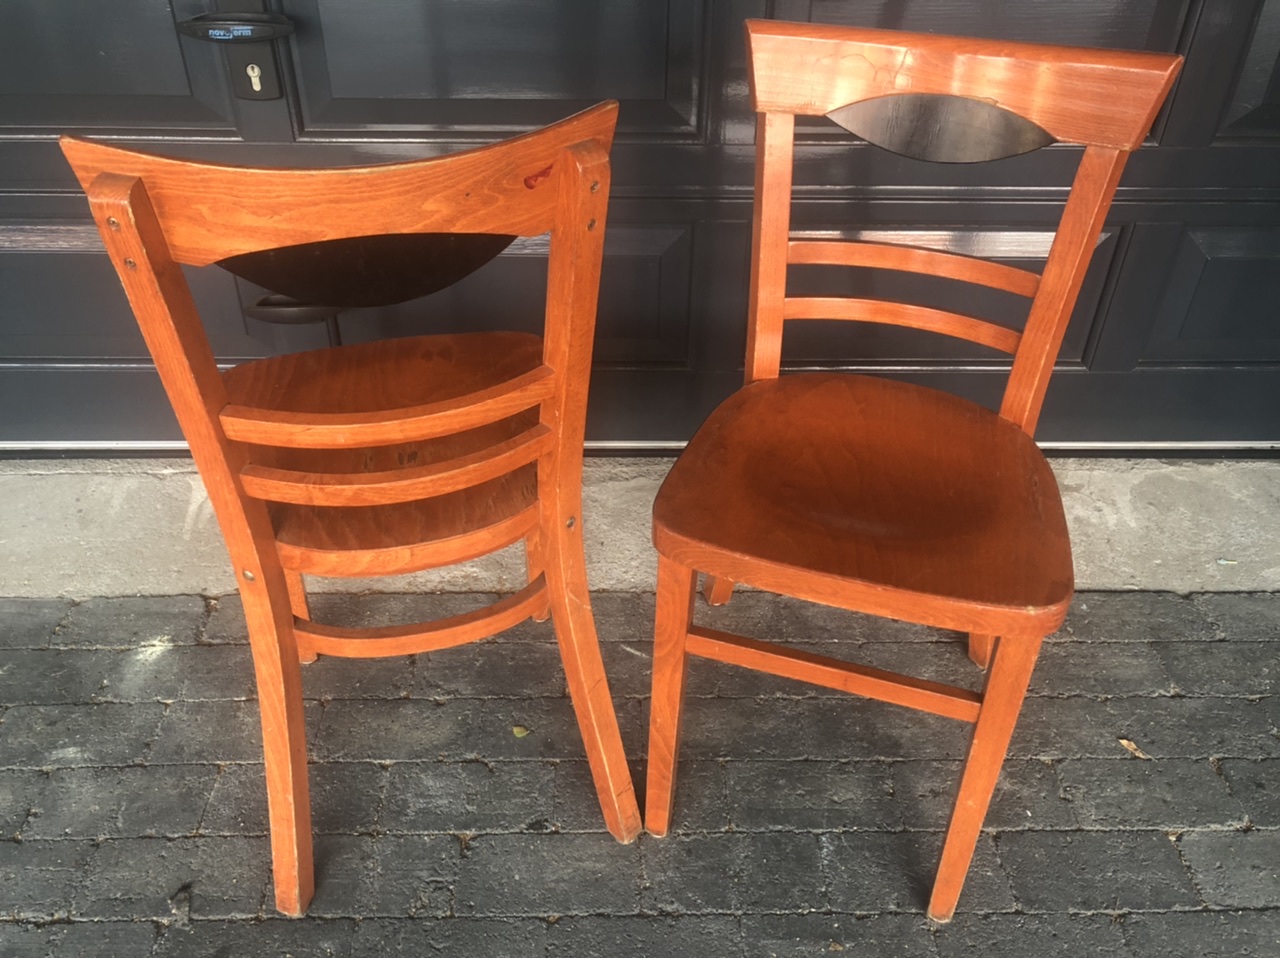 Gebruikte cafe stoelen amsterdam apeldoorn used chairs horeca restaurant thonet